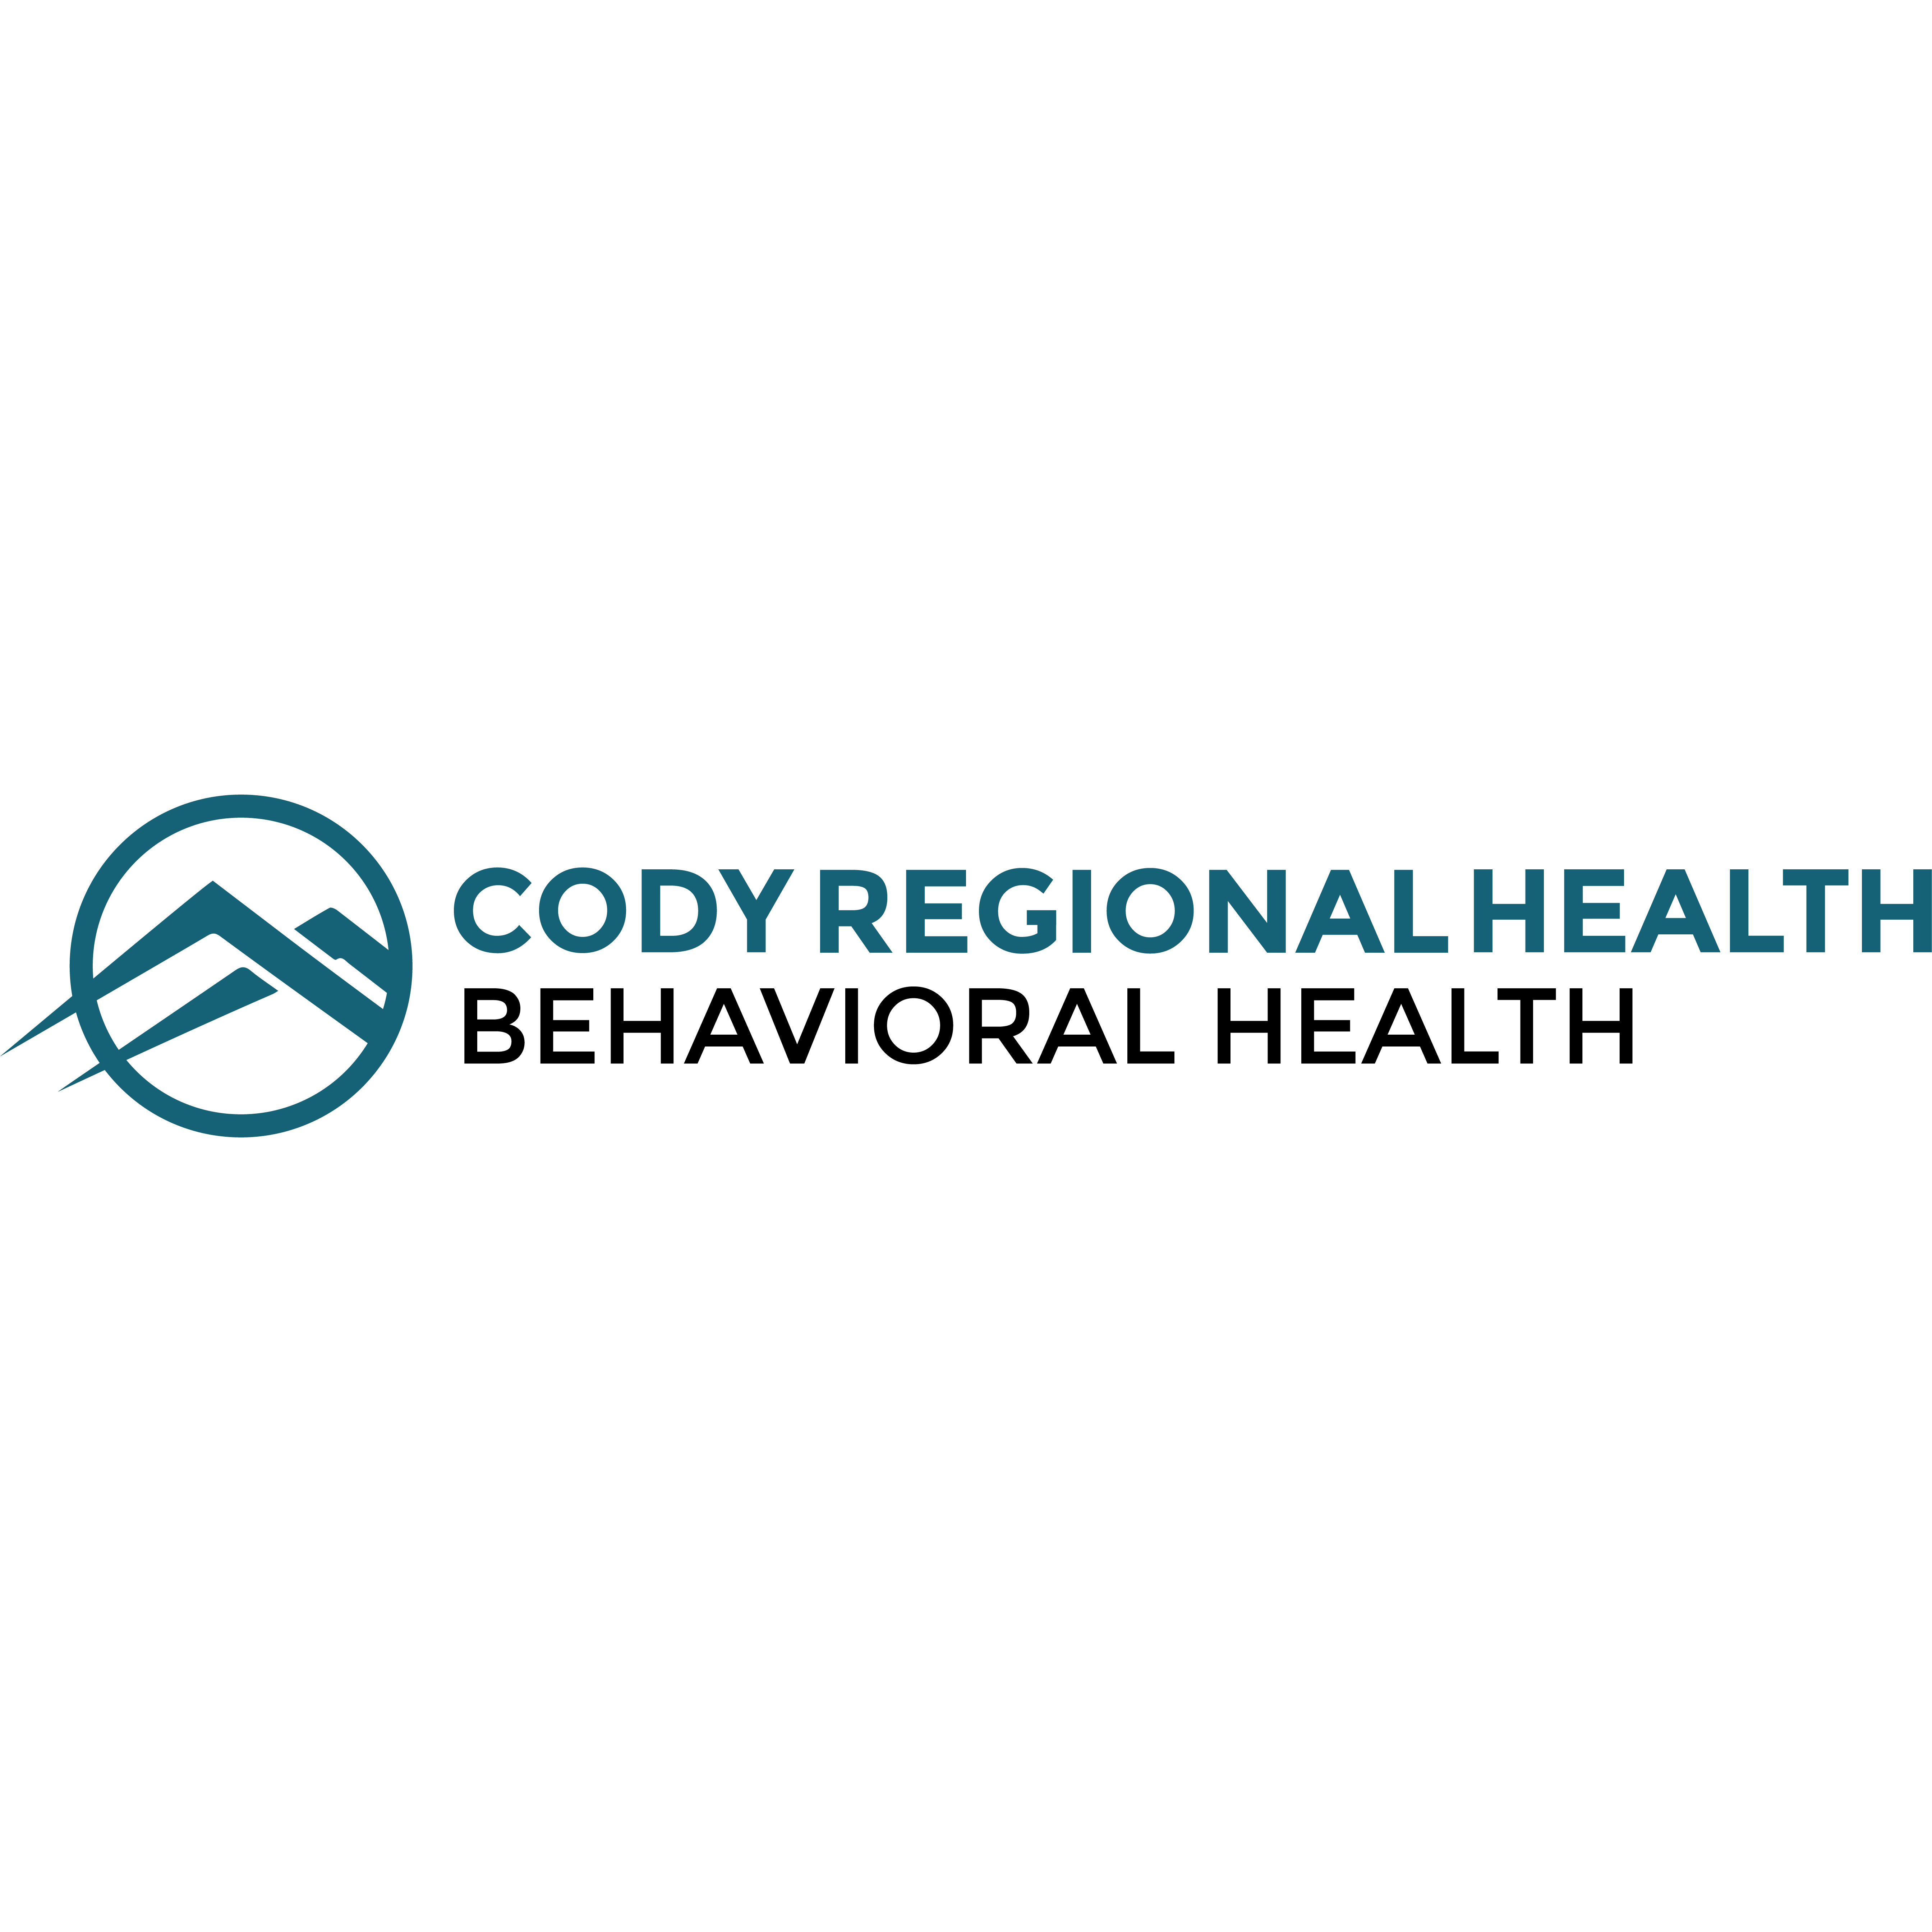 Cody Regional Health Behavioral Health Clinic Logo